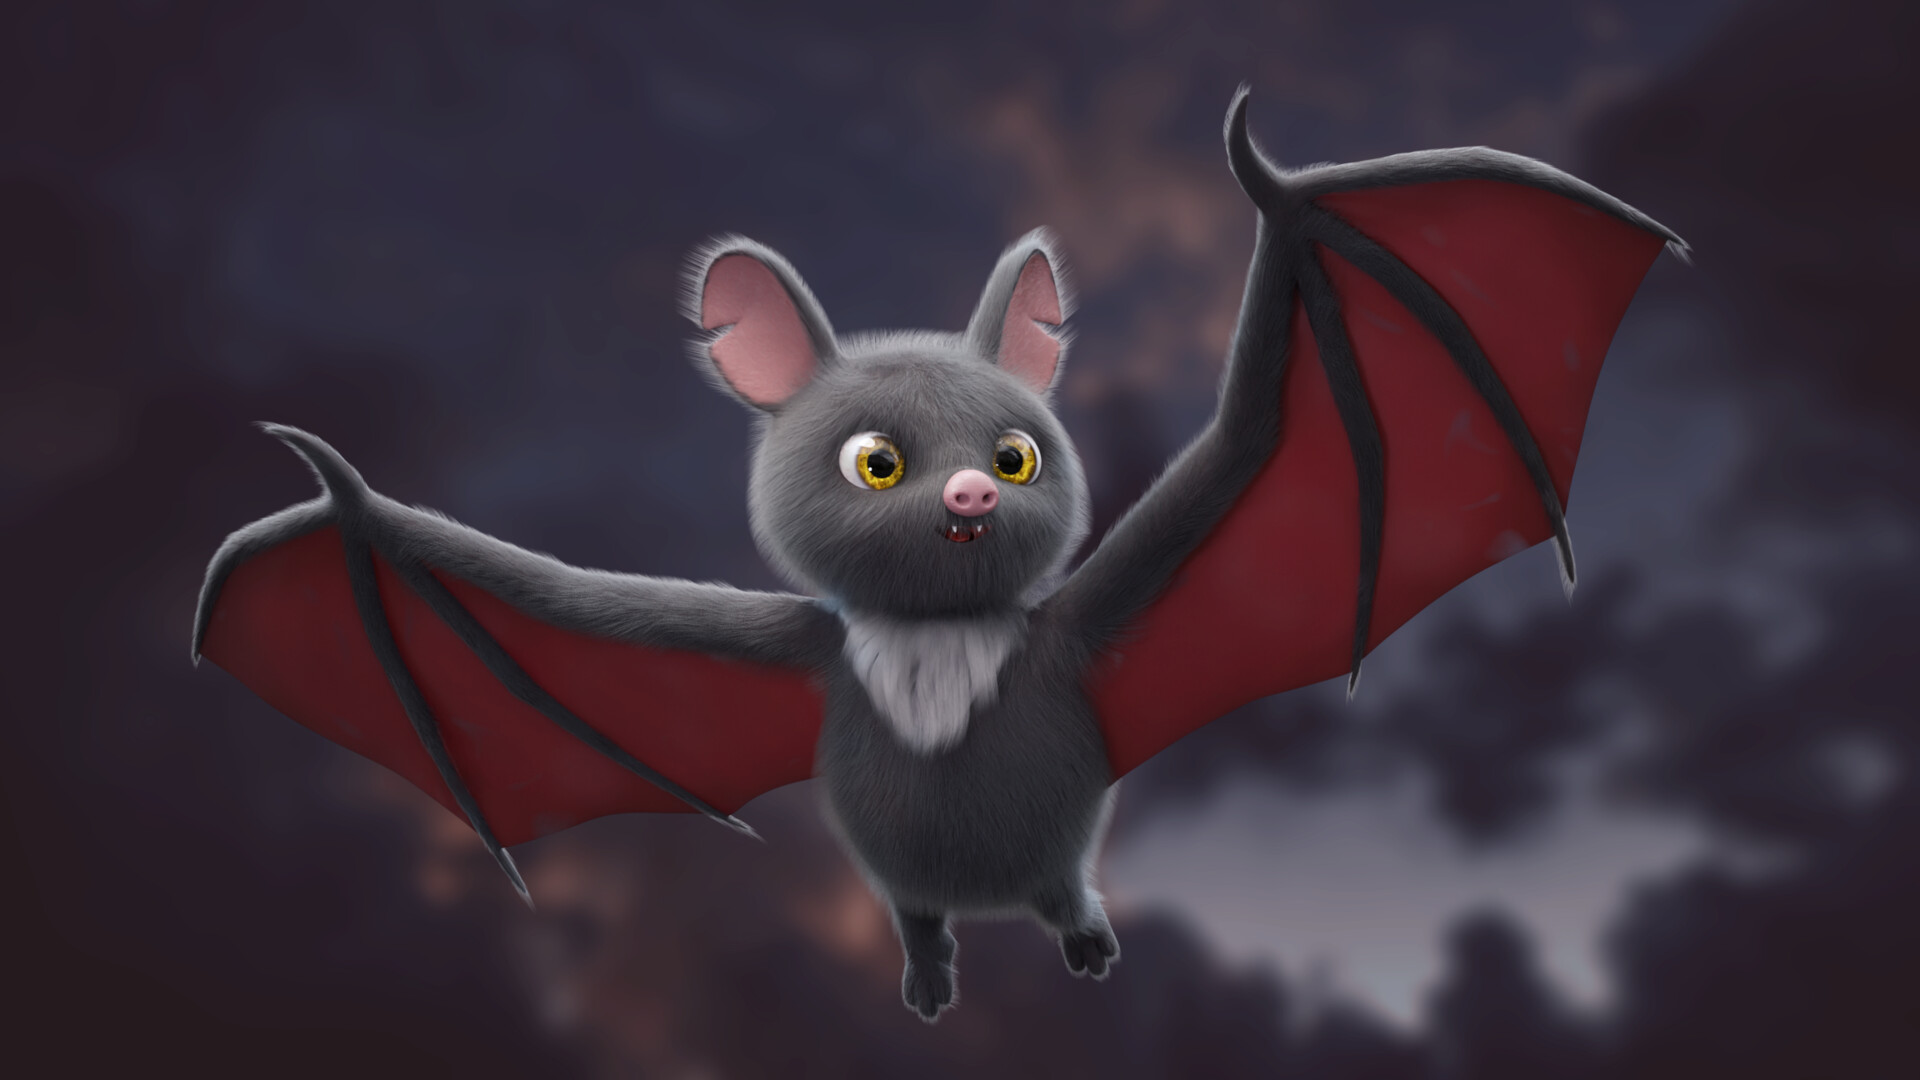 ArtStation - 3D Cartoon Bat